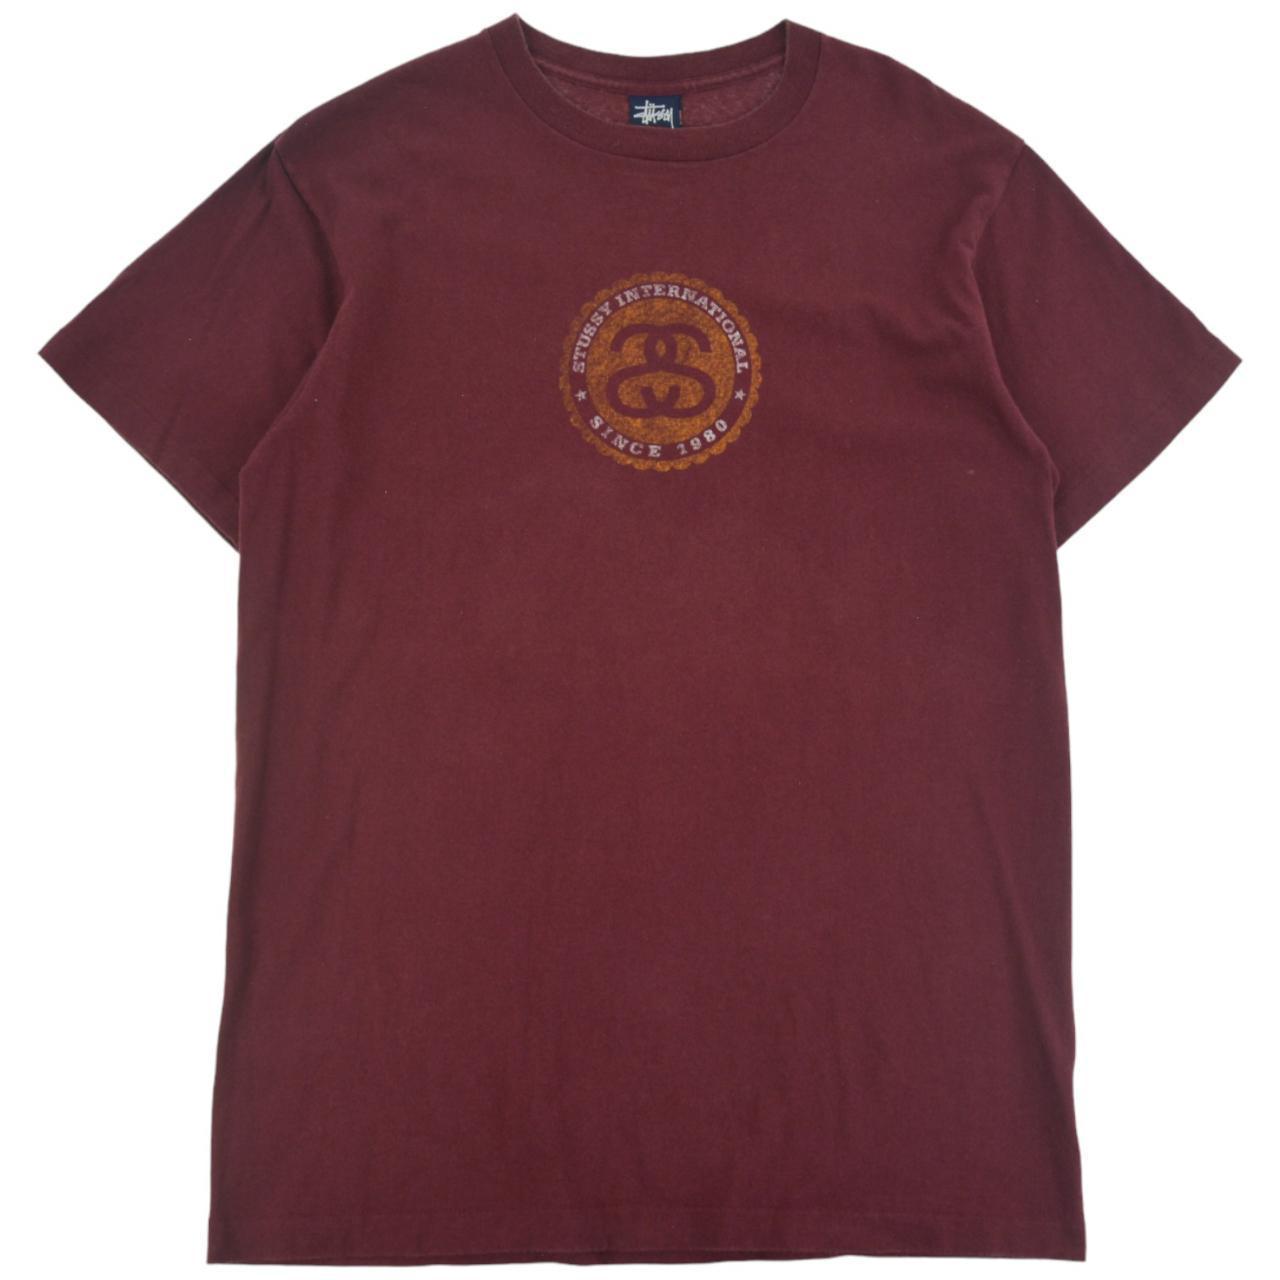 Vintage Stussy T Shirt Size L - Known Source